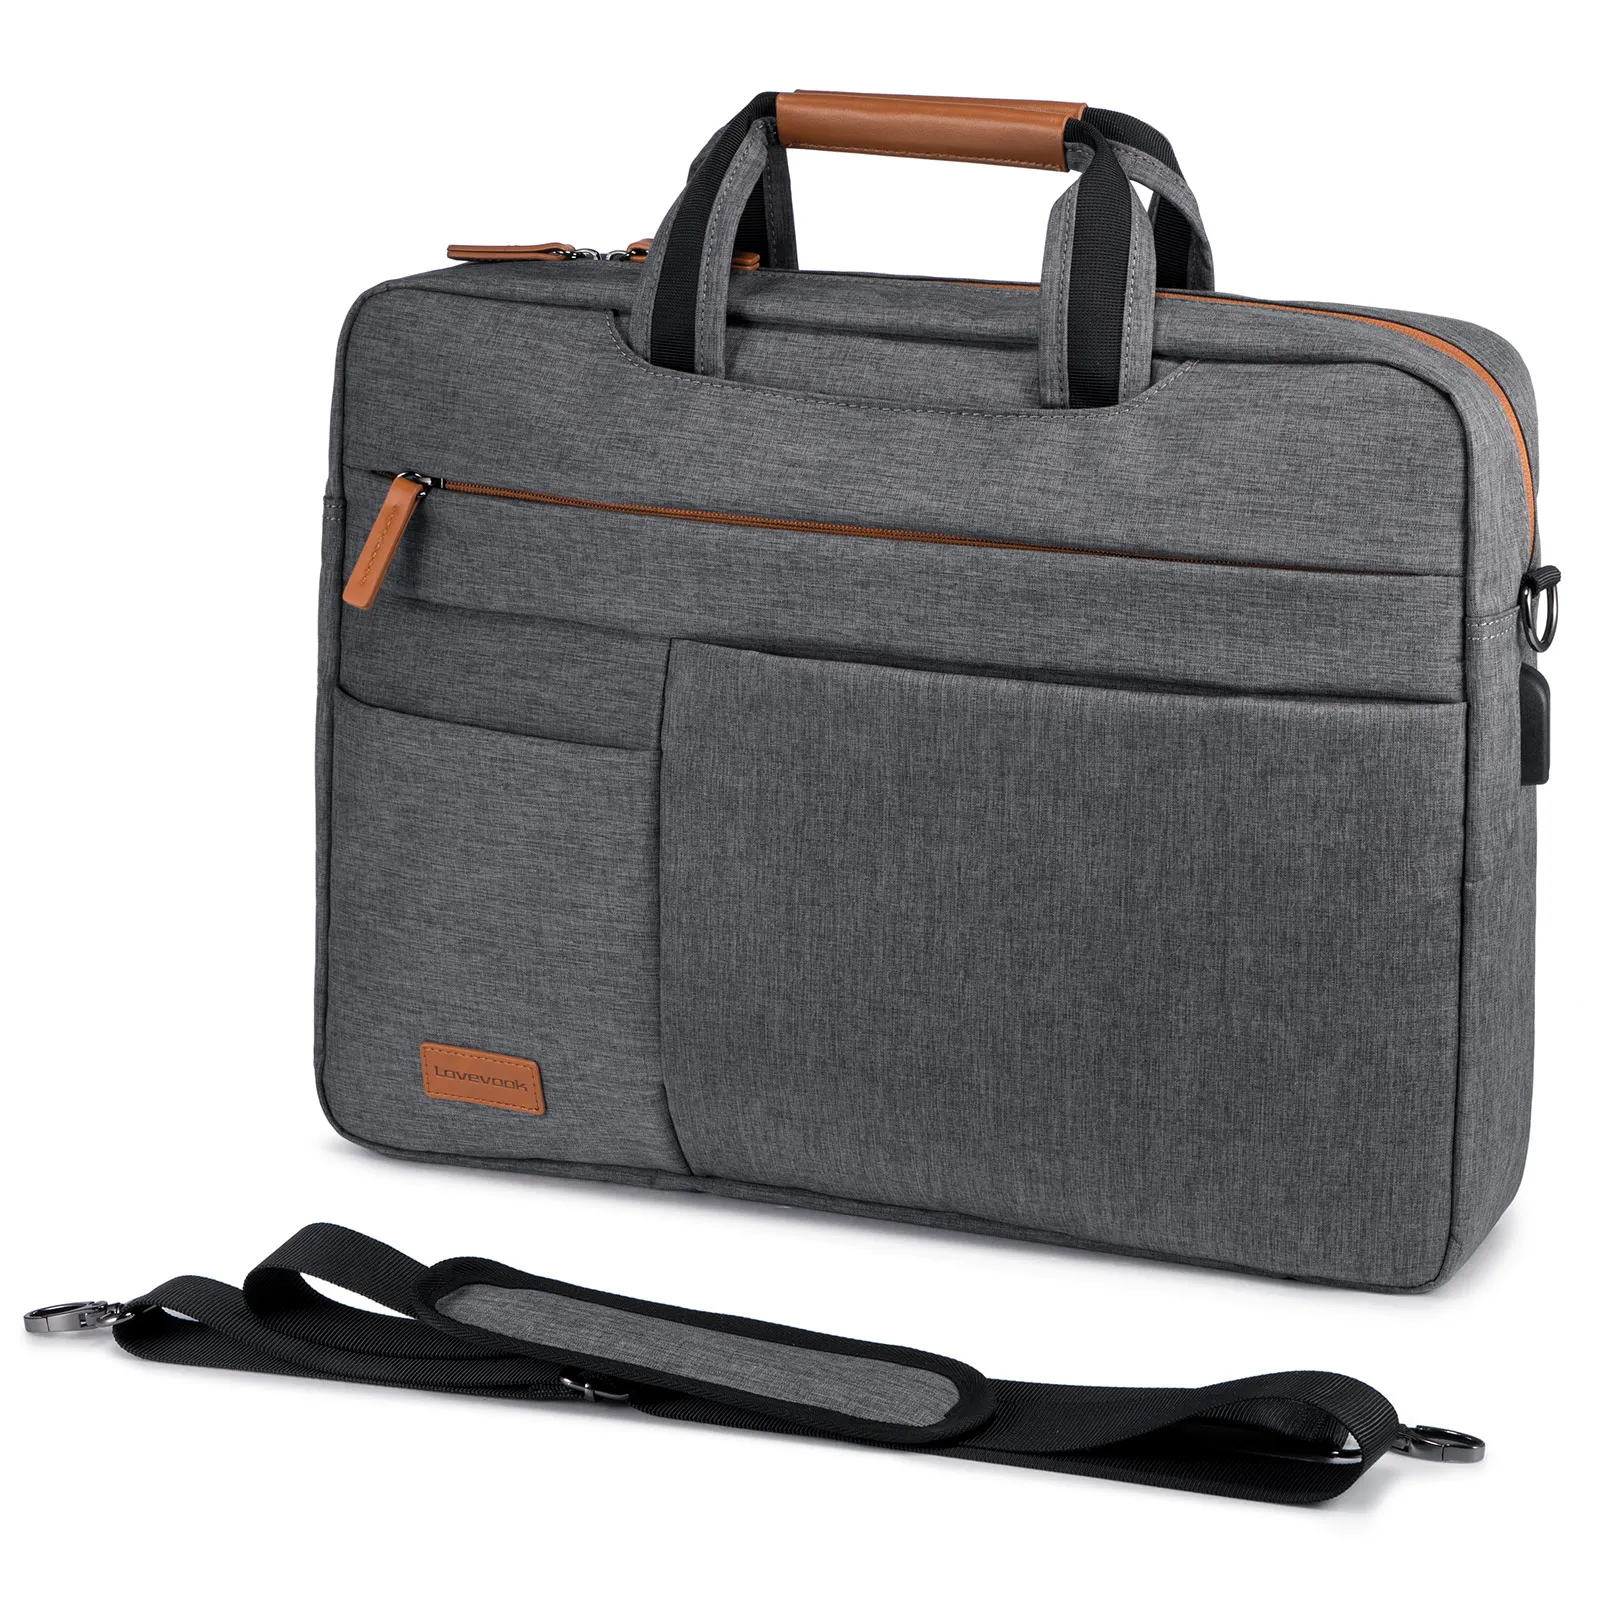 

LOVEVOOK 14 15.6 17 inch Waterproof Briefcase Bag PC Tablet Computer Shoulder Bag for Men Women Work Business Travel Laptop Bags